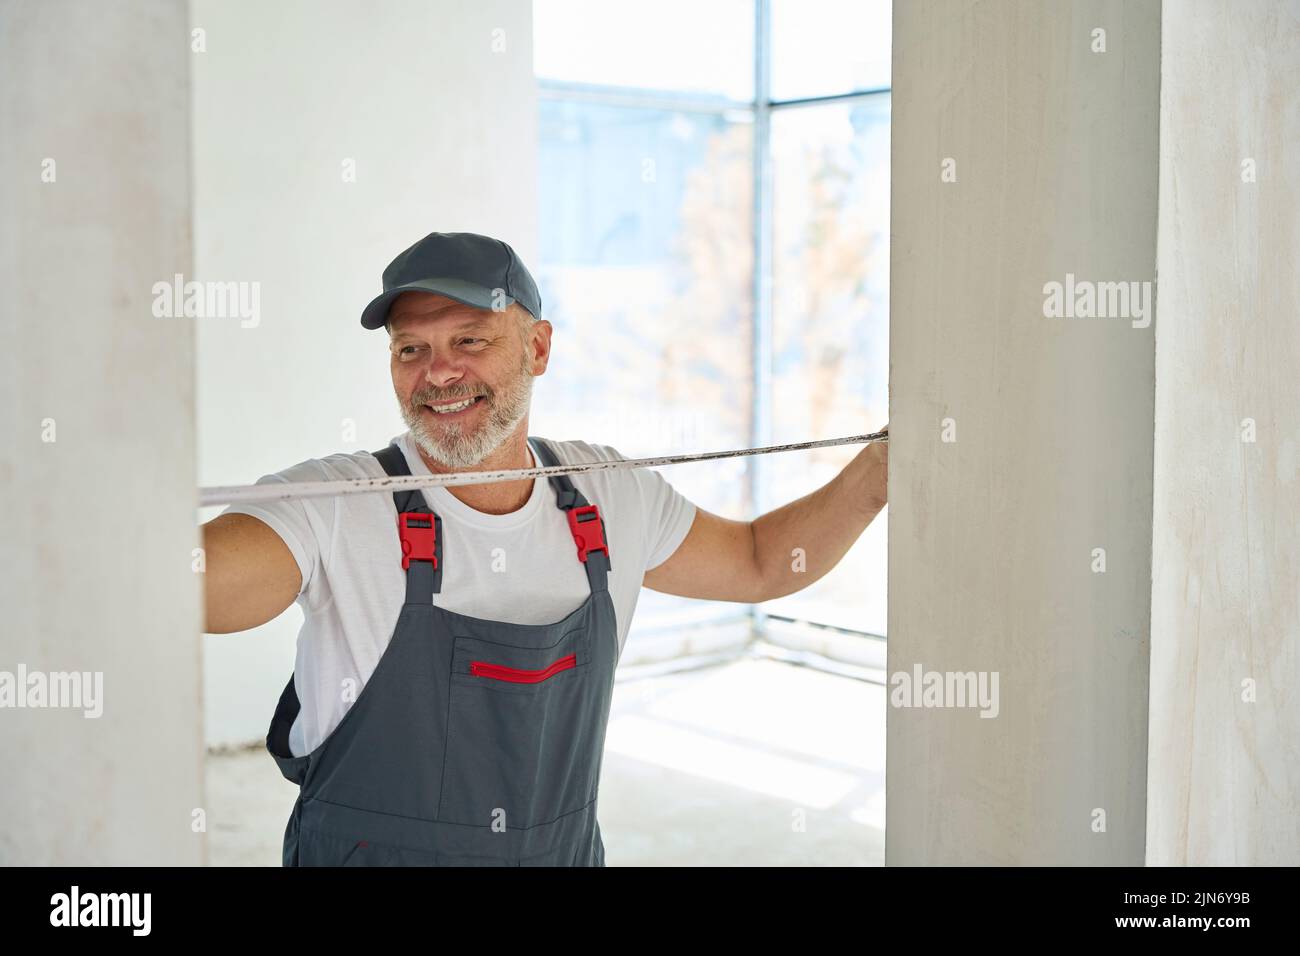 Joyful gray-haired builder measures width of doorway with tape measure Stock Photo